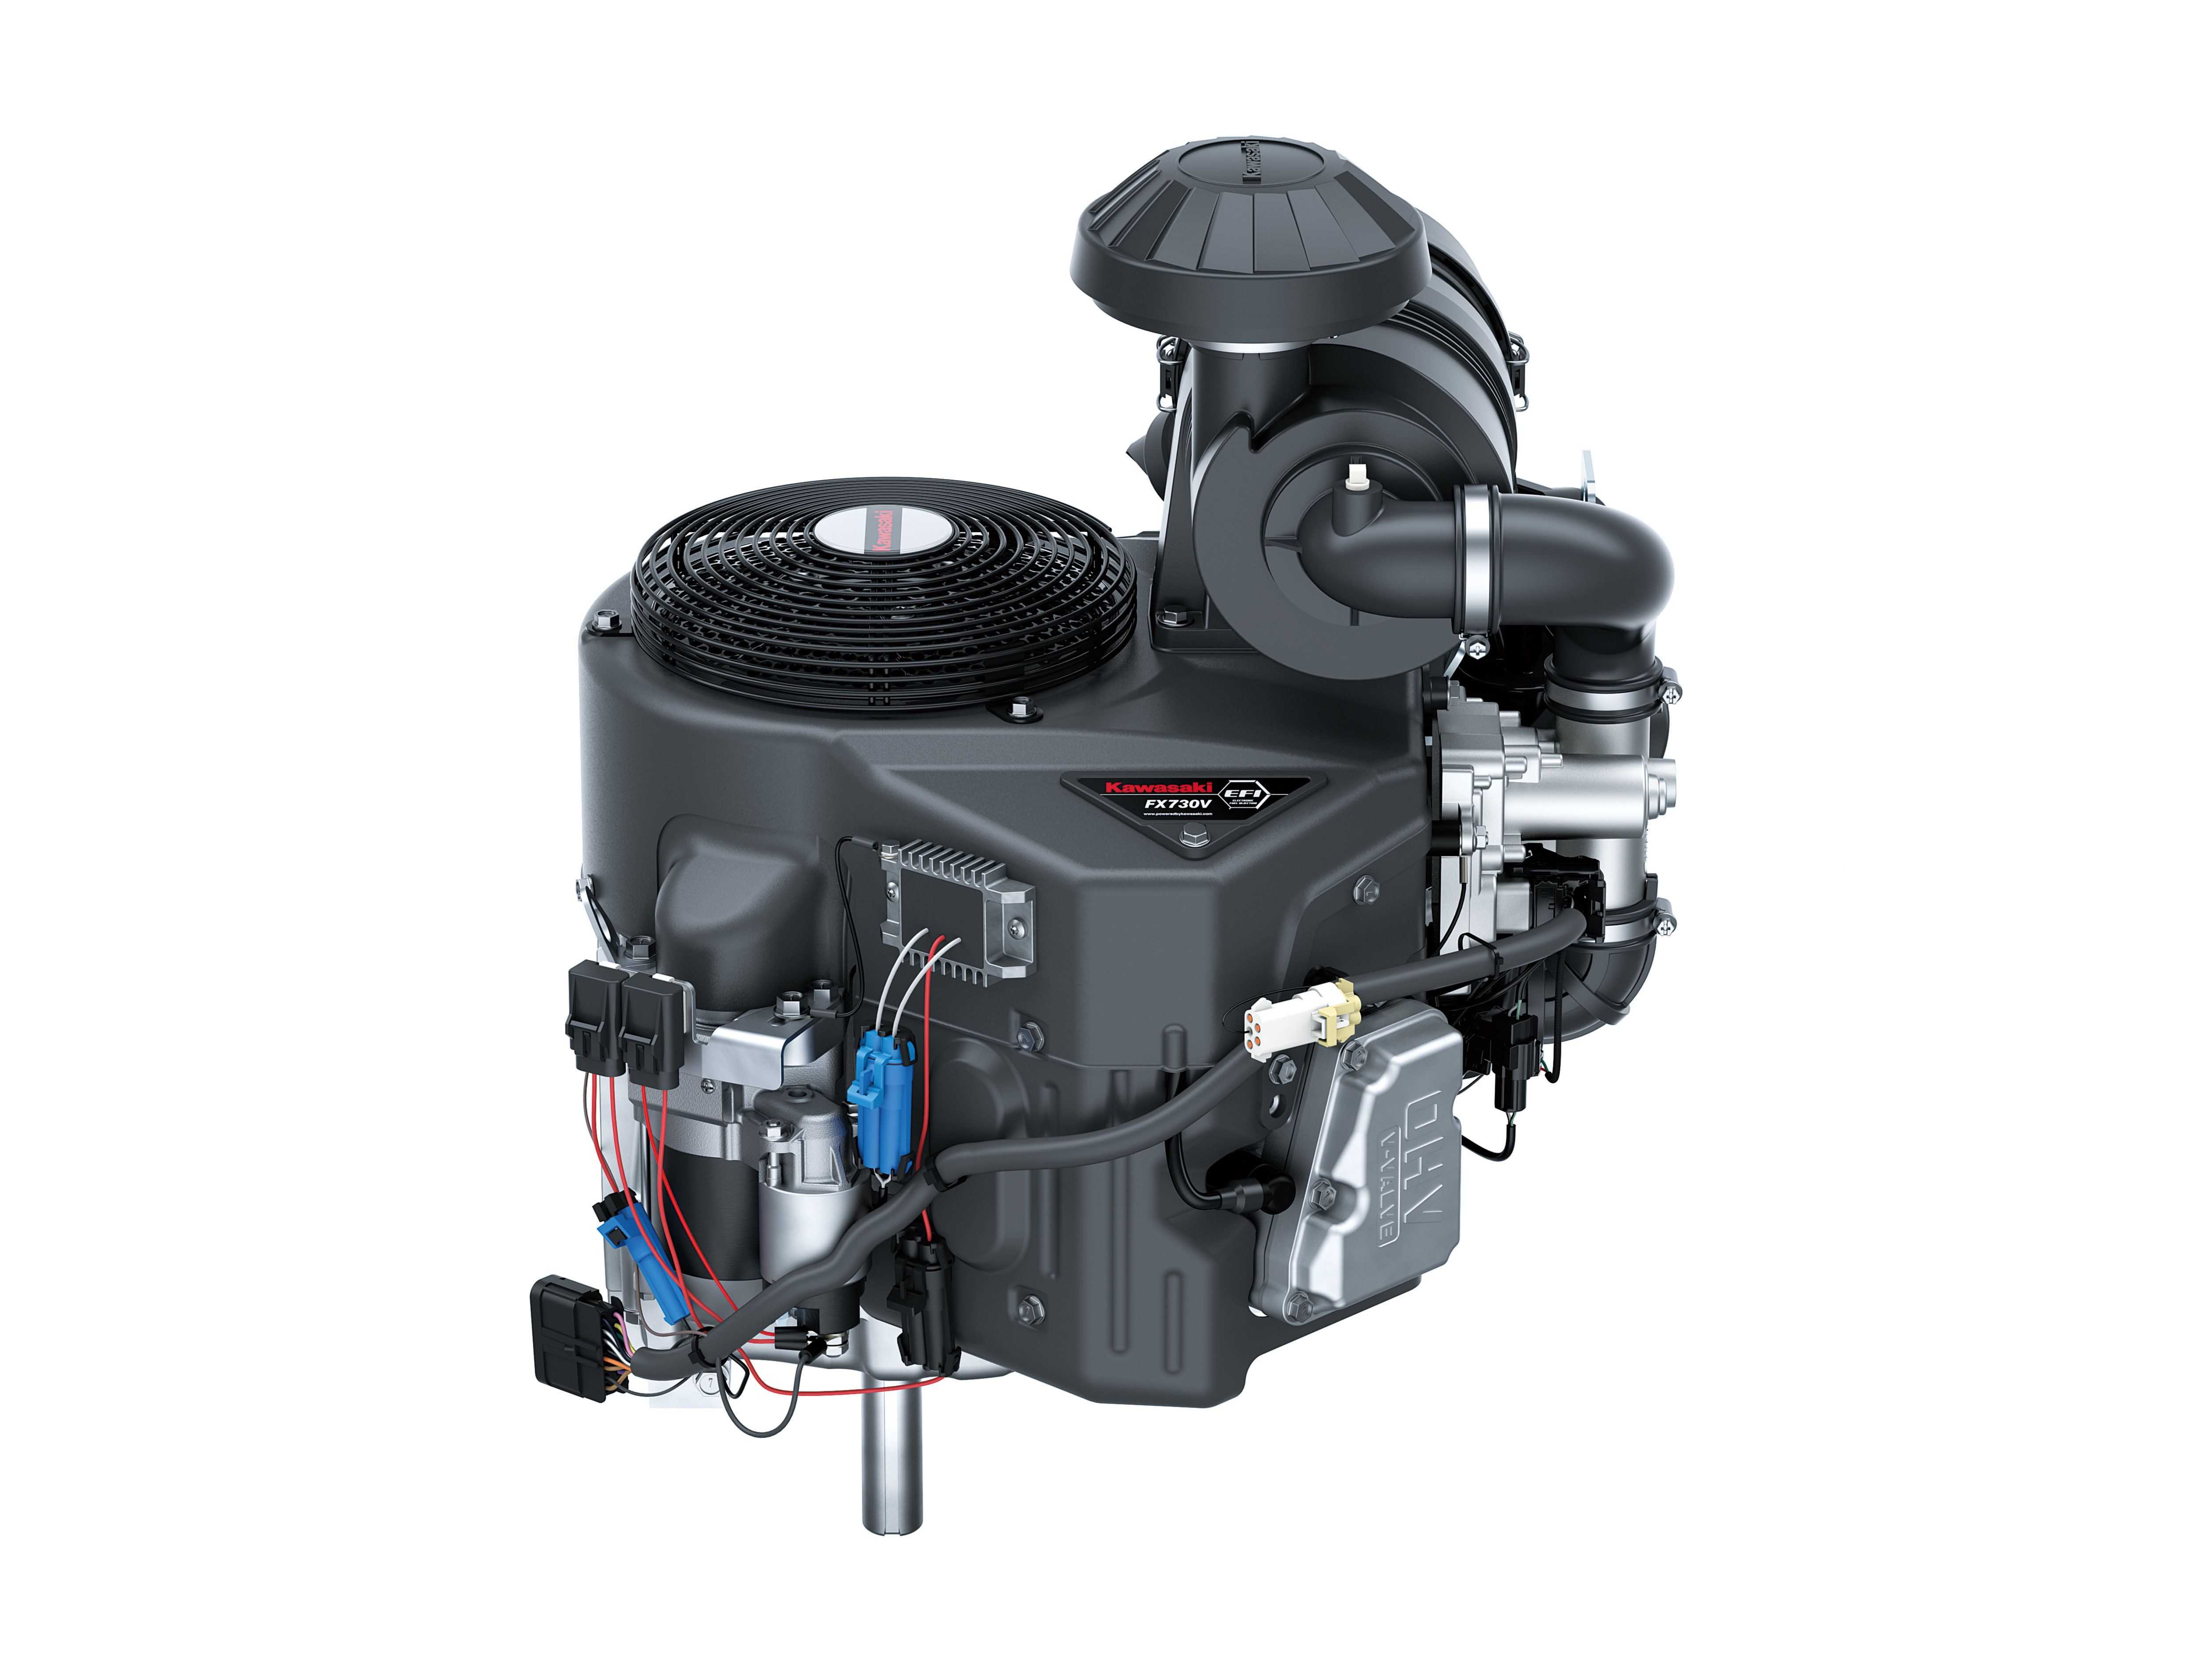 FX850V EFI (Electronic Fuel Injection) Engine | Kawasaki Engines